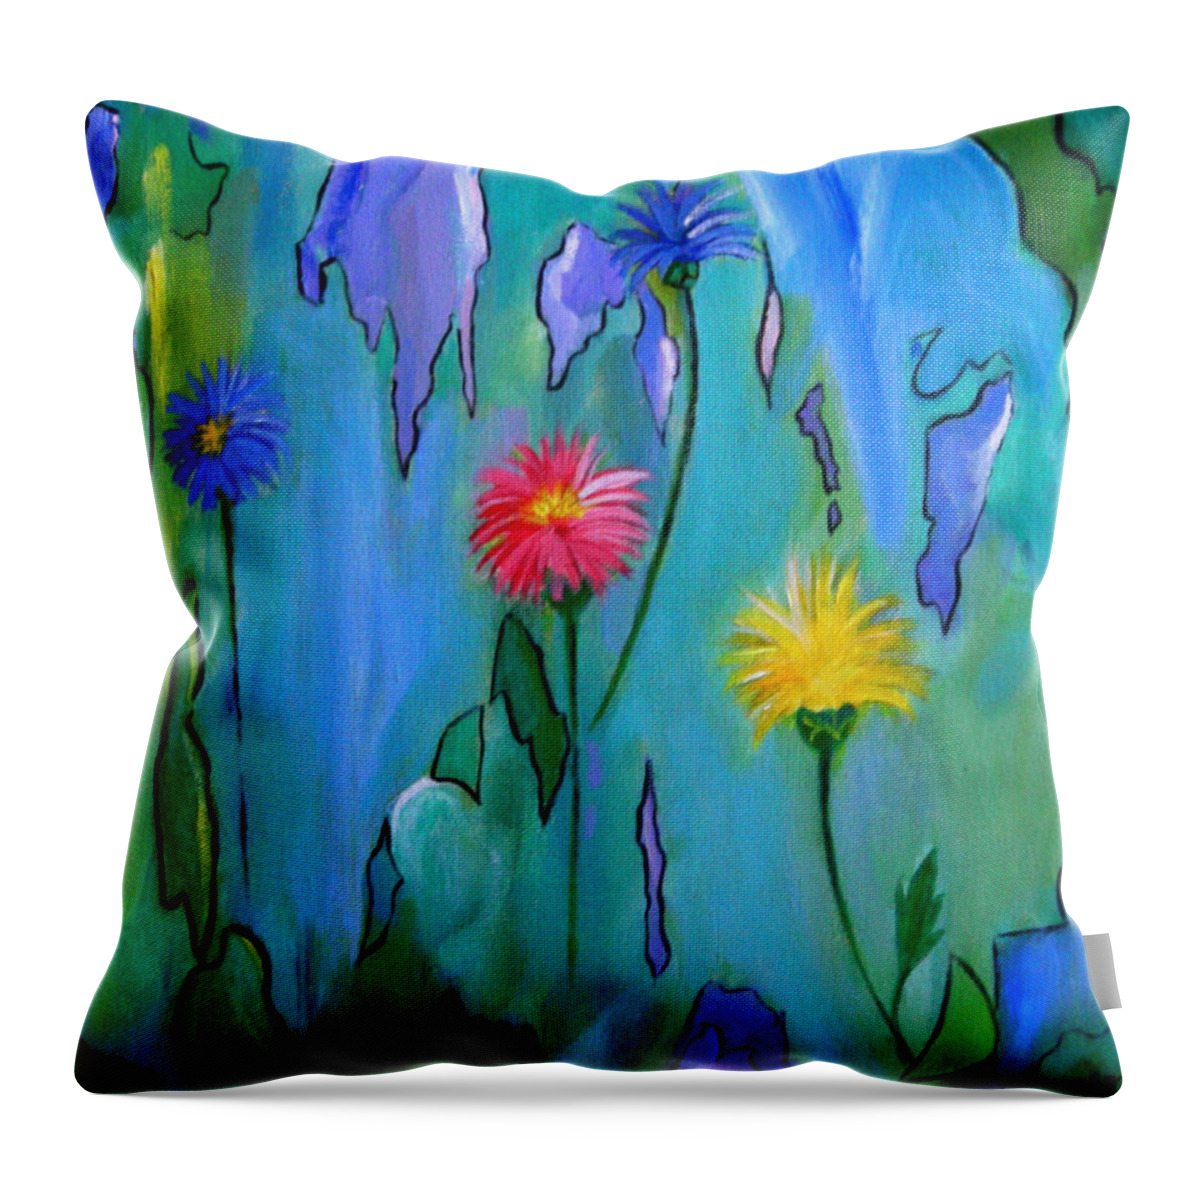 Cornflowers Throw Pillow featuring the painting Cornflowers by Gloria Dietz-Kiebron